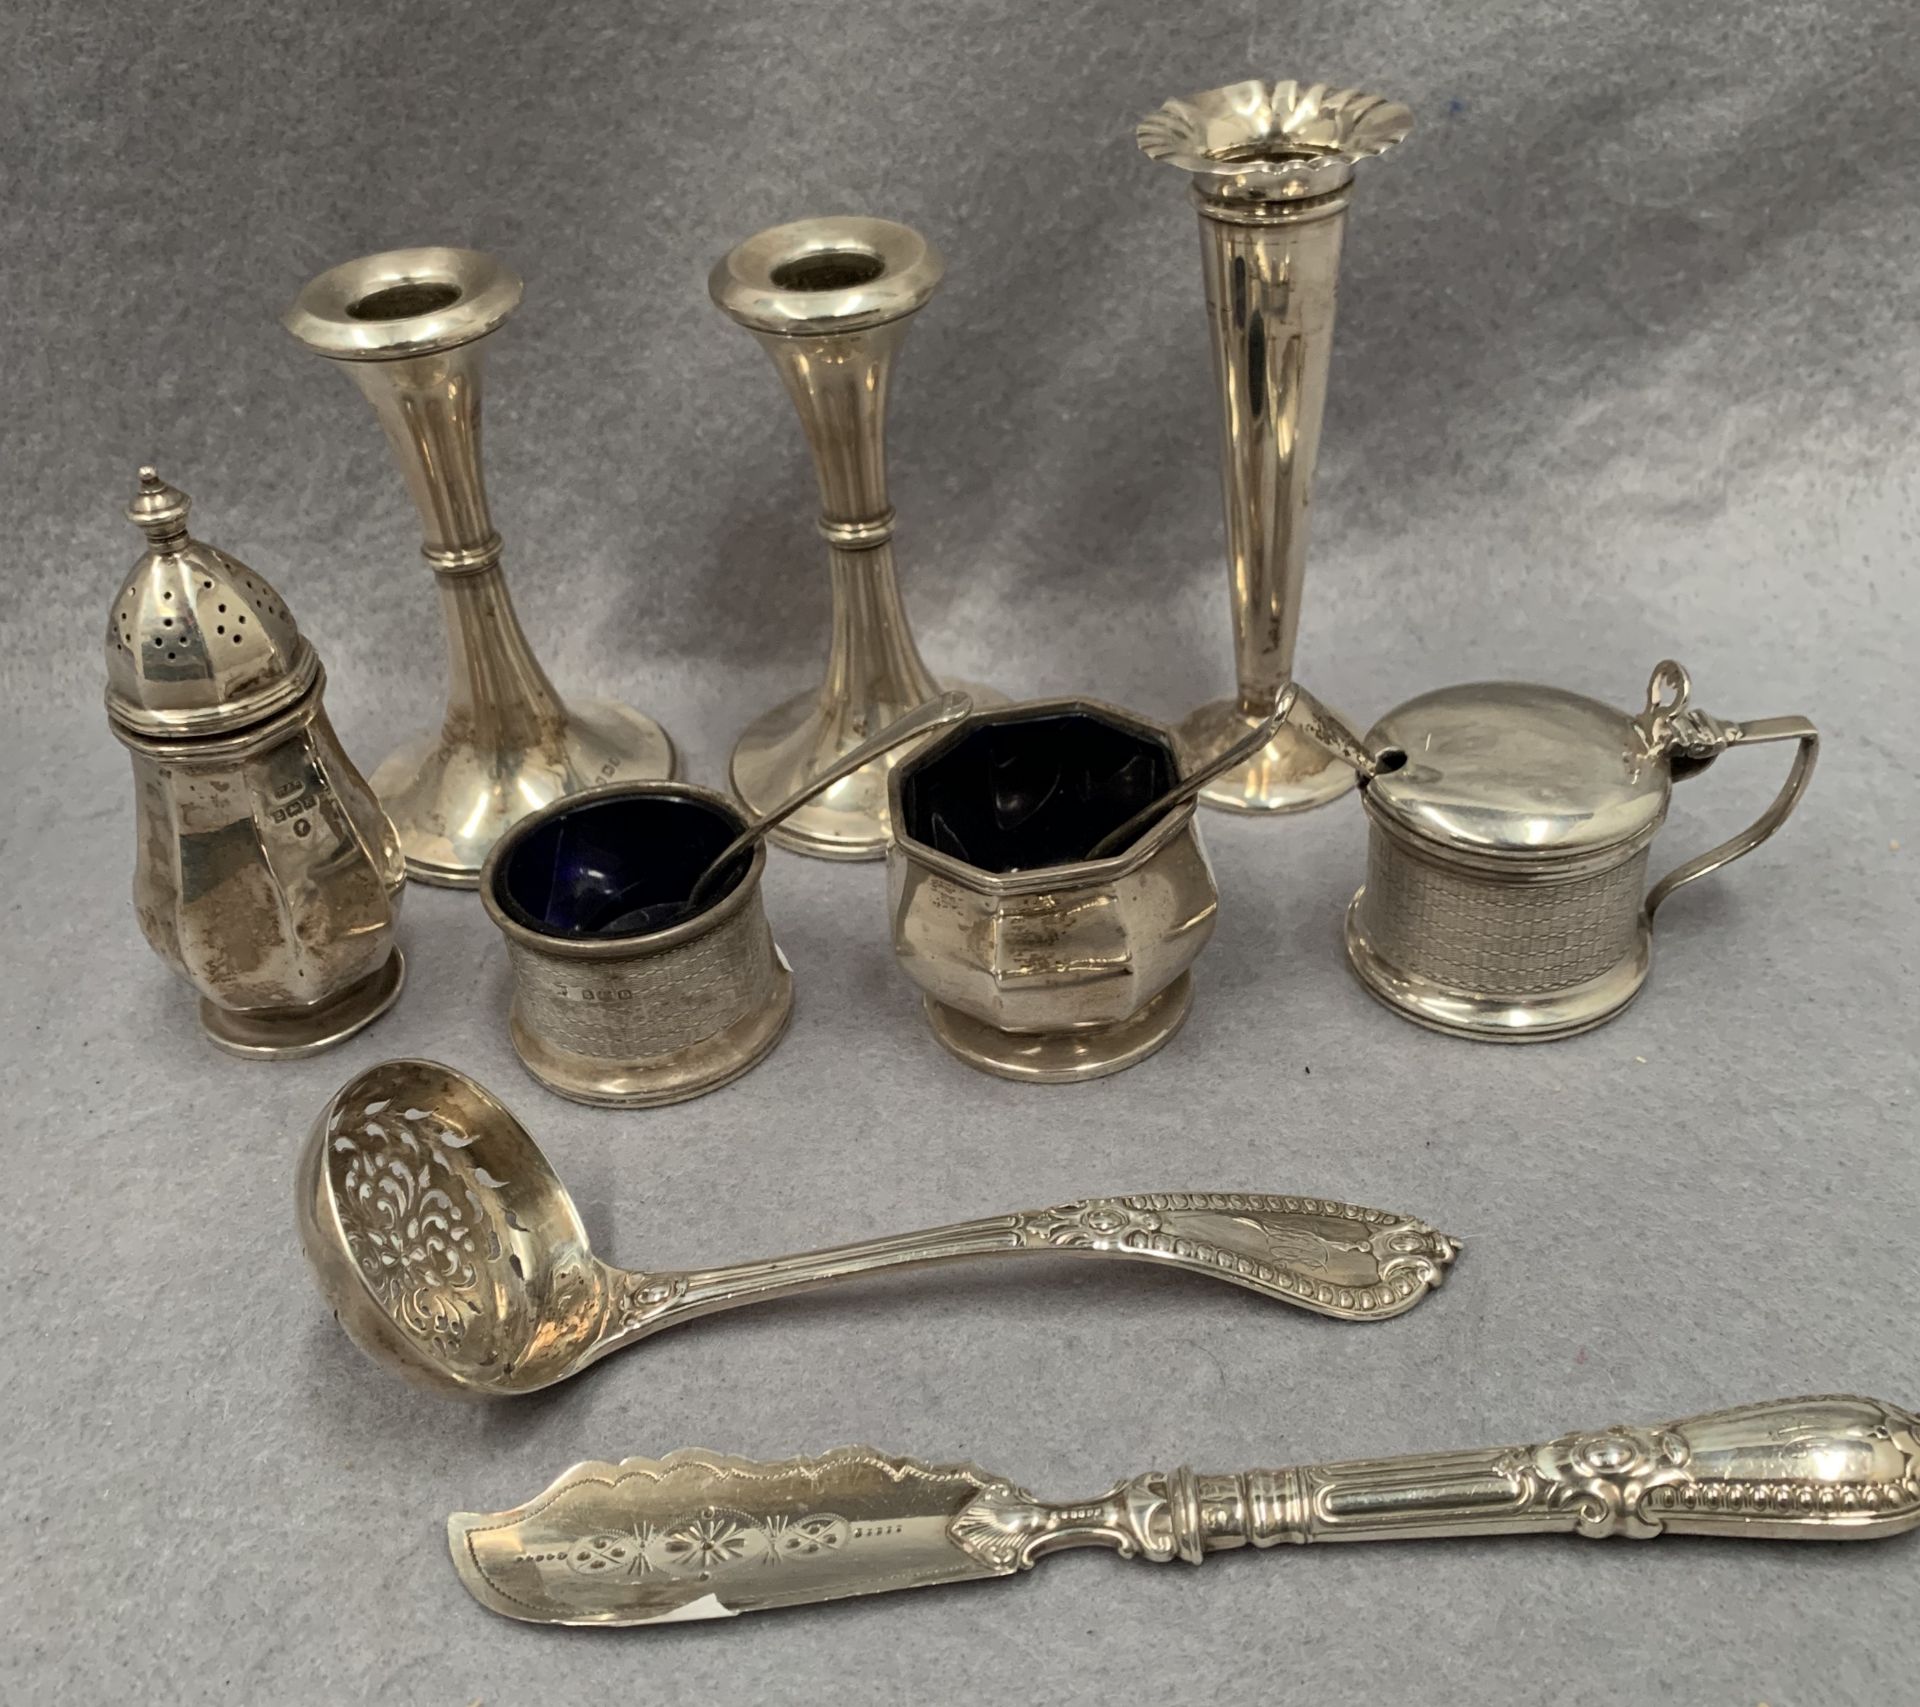 A pair of small silver candlesticks, a small silver vase, a silver mustard pot,